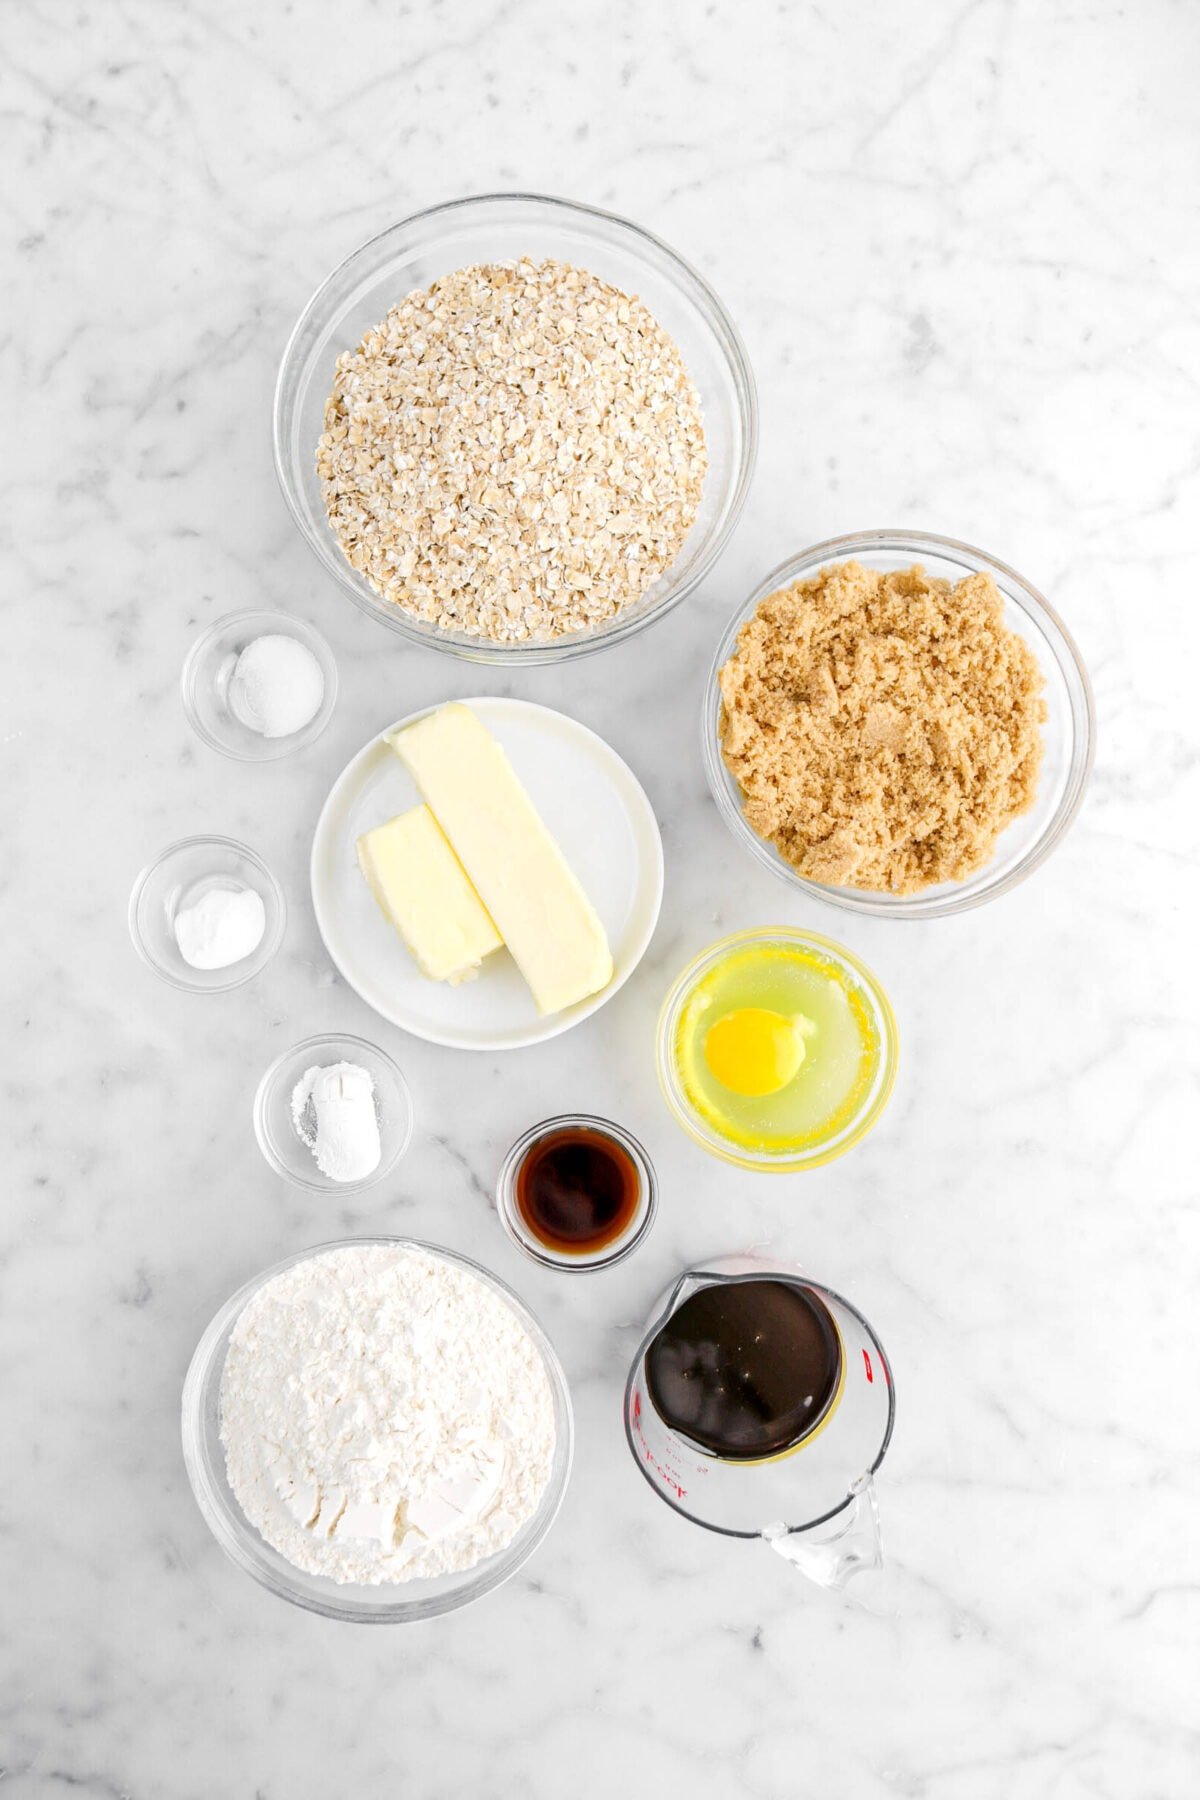 oats, salt, butter, baking soda, baking powder, brown sugar, egg, vanilla, flour, and molasses on marble surface.